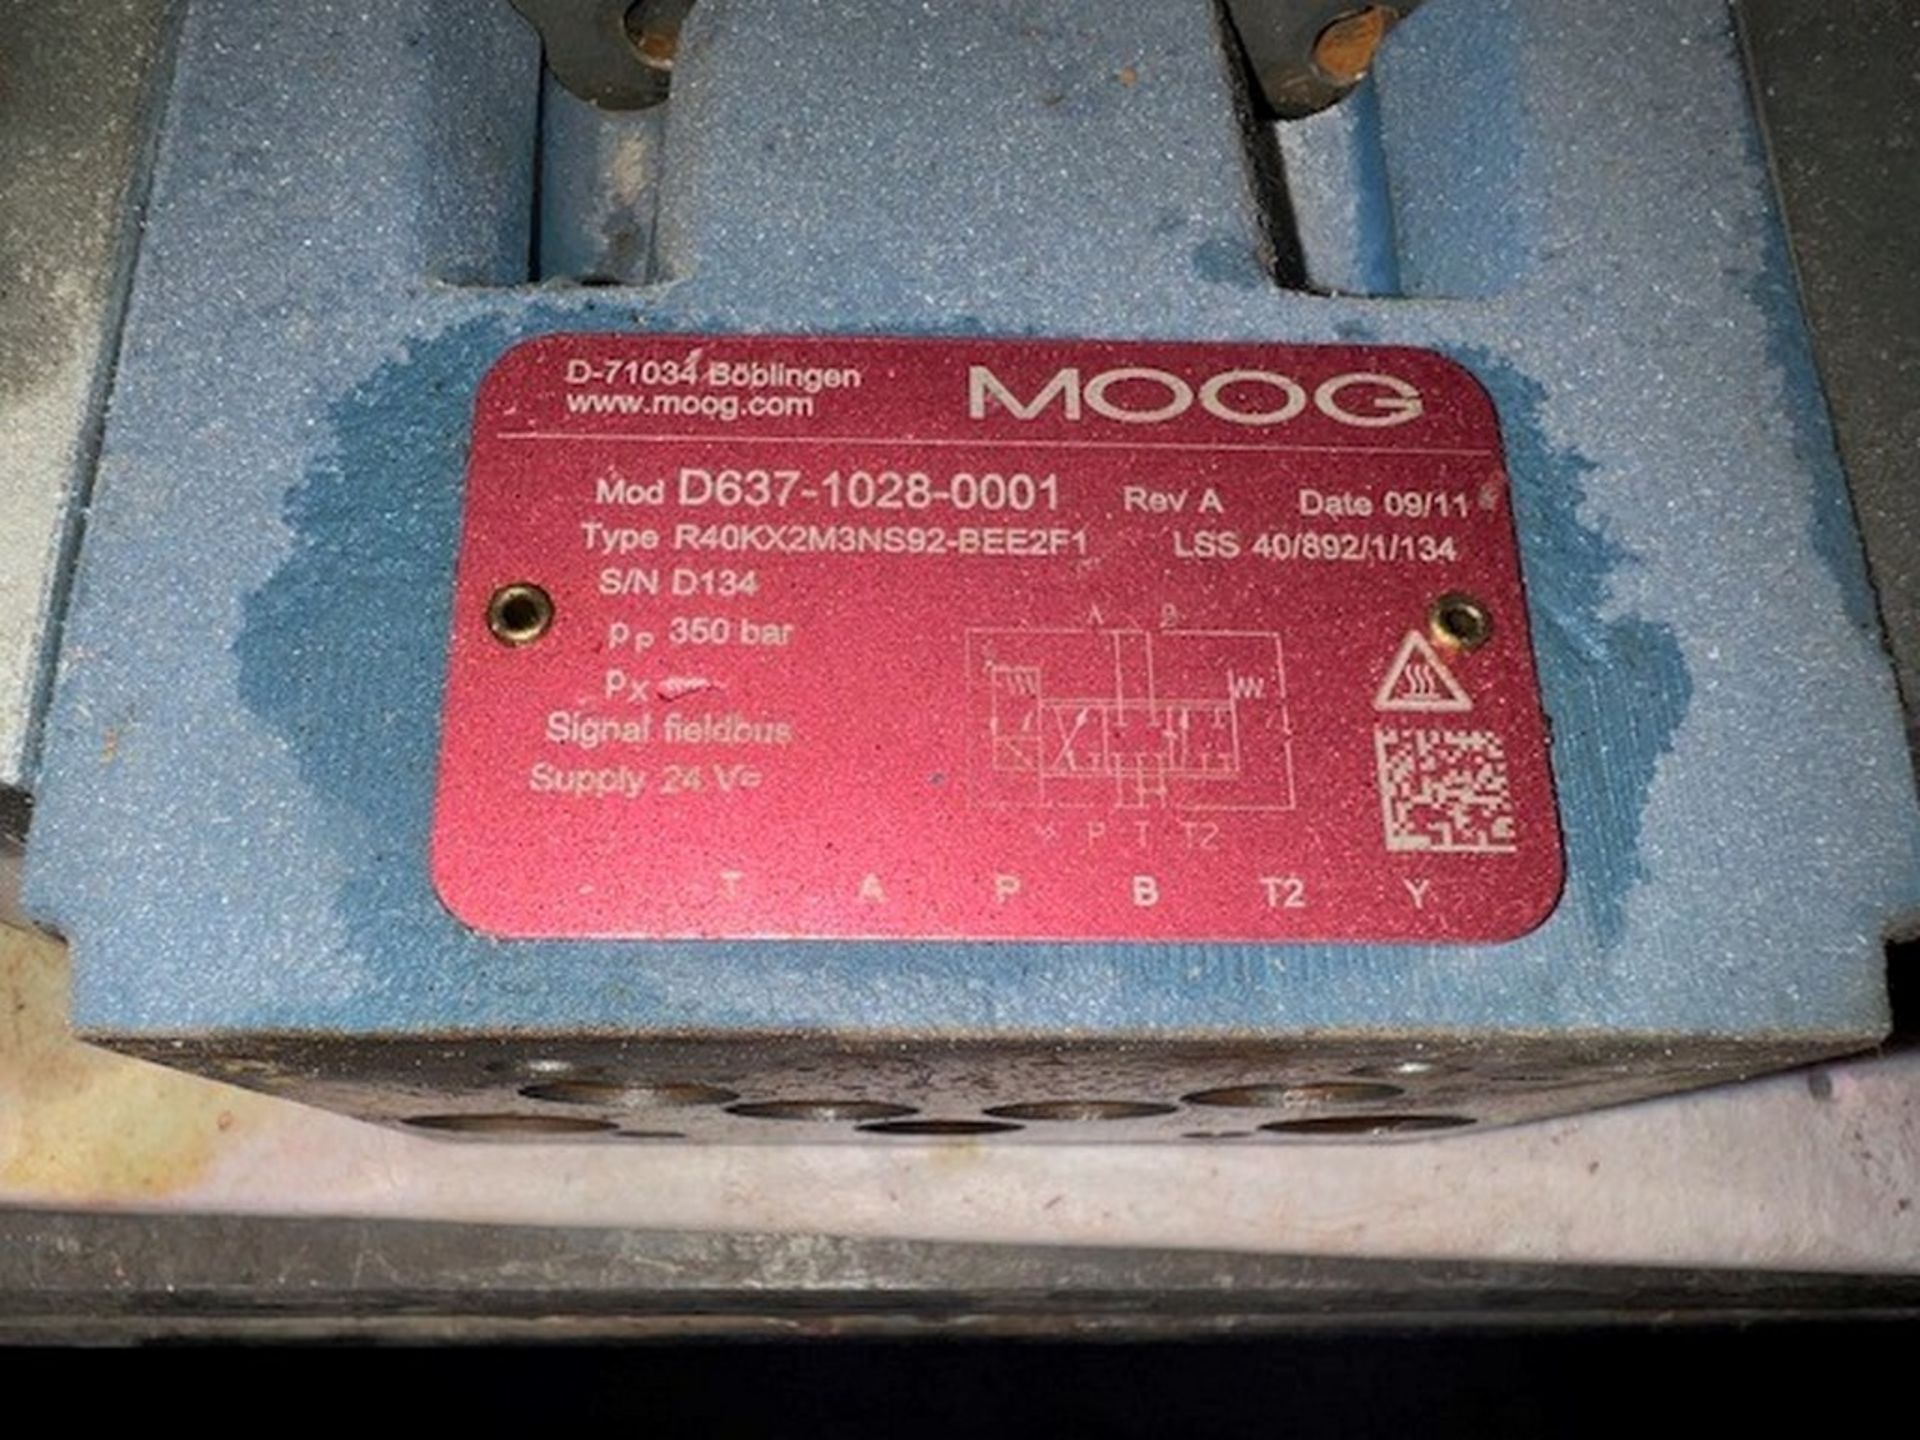 (5) MOOG MODEL D637-1022-0001 DIRECT-OPERATED ANALOG SIGNALED SERVO VALVES - Image 3 of 3